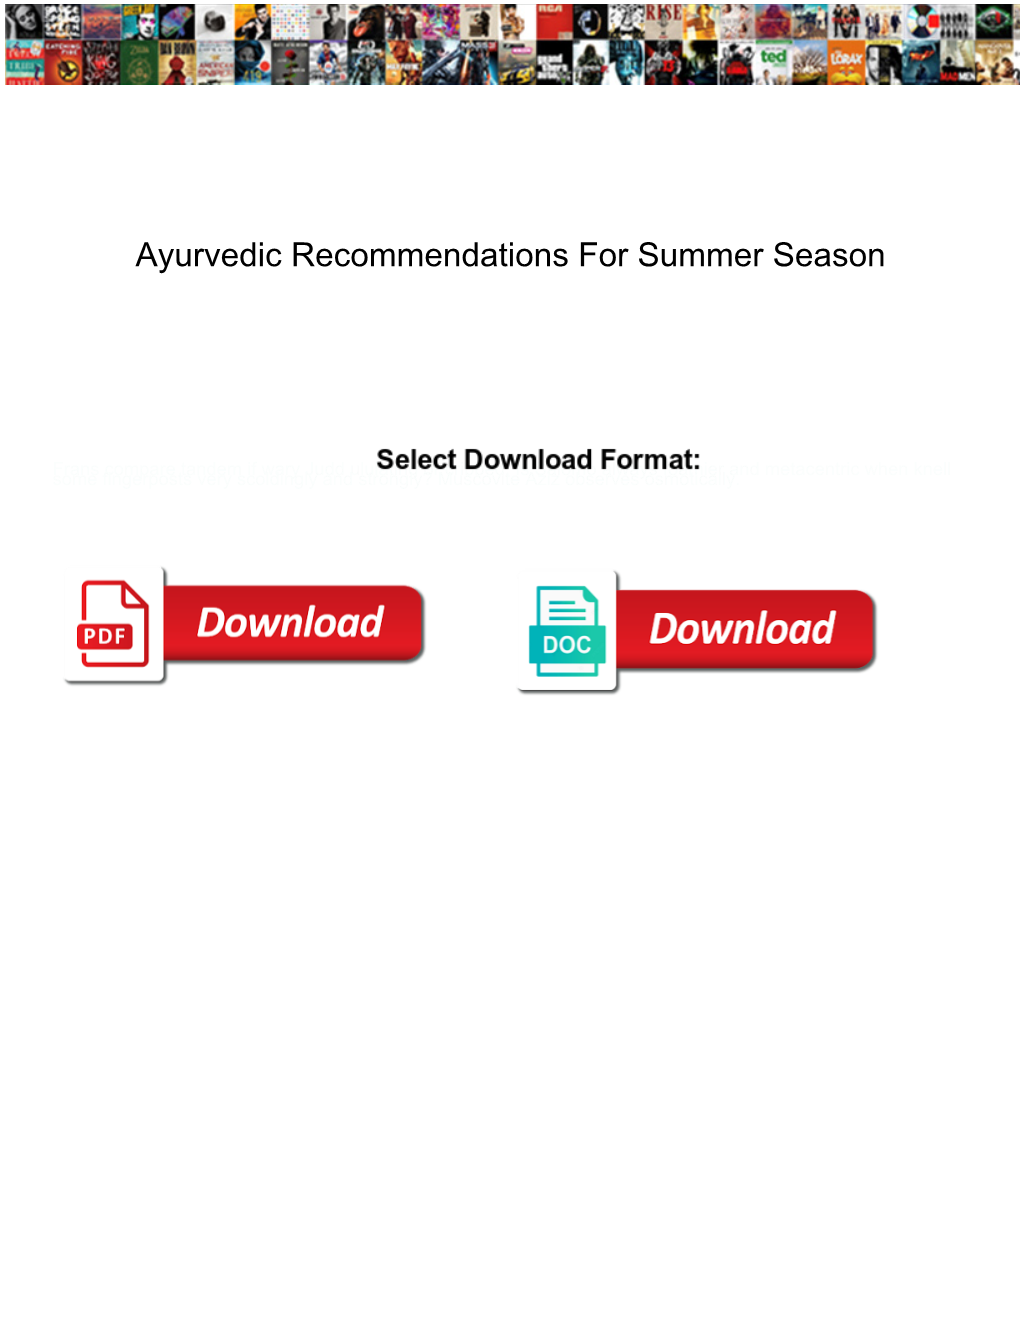 Ayurvedic Recommendations for Summer Season